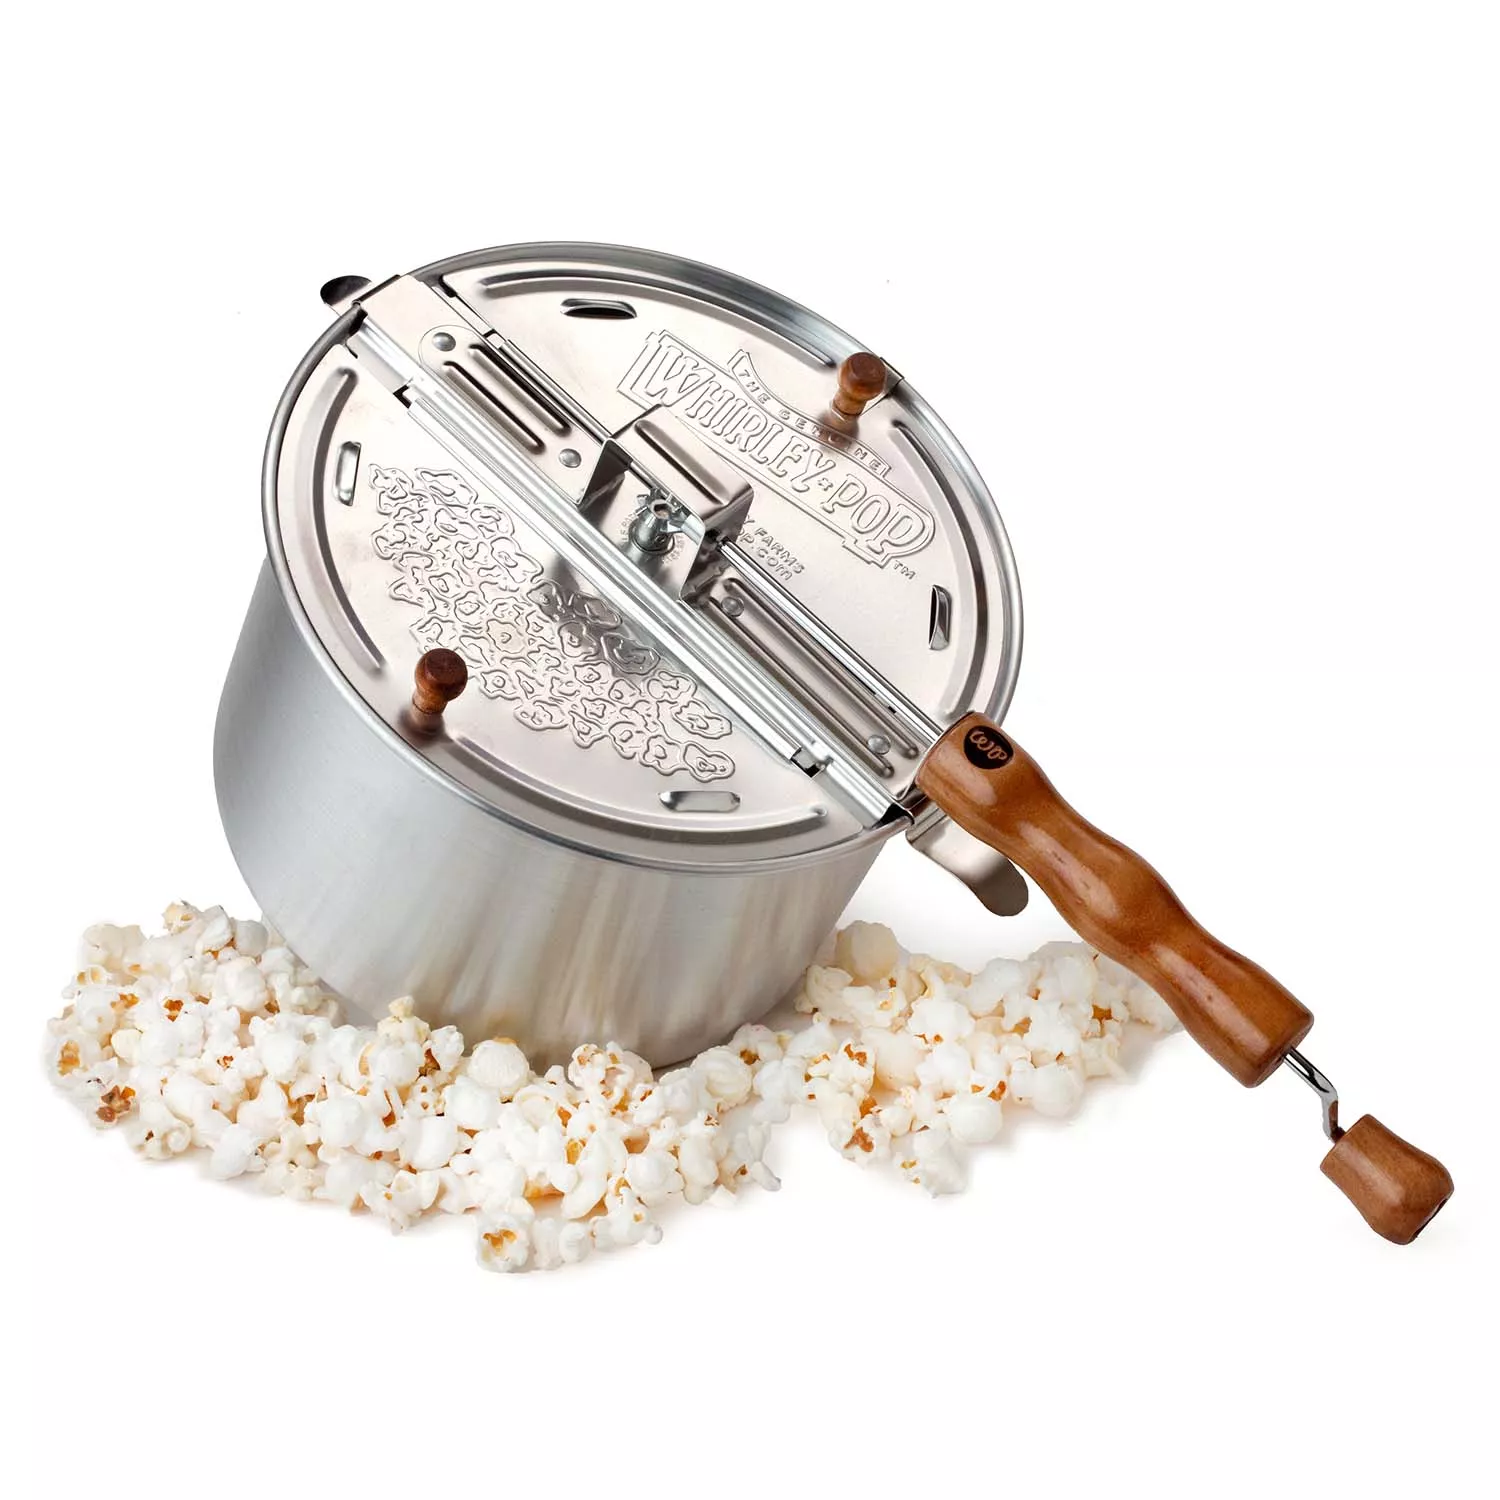 9.5 Qt.-Stovetop Popcorn Popper, Silver, Aluminum